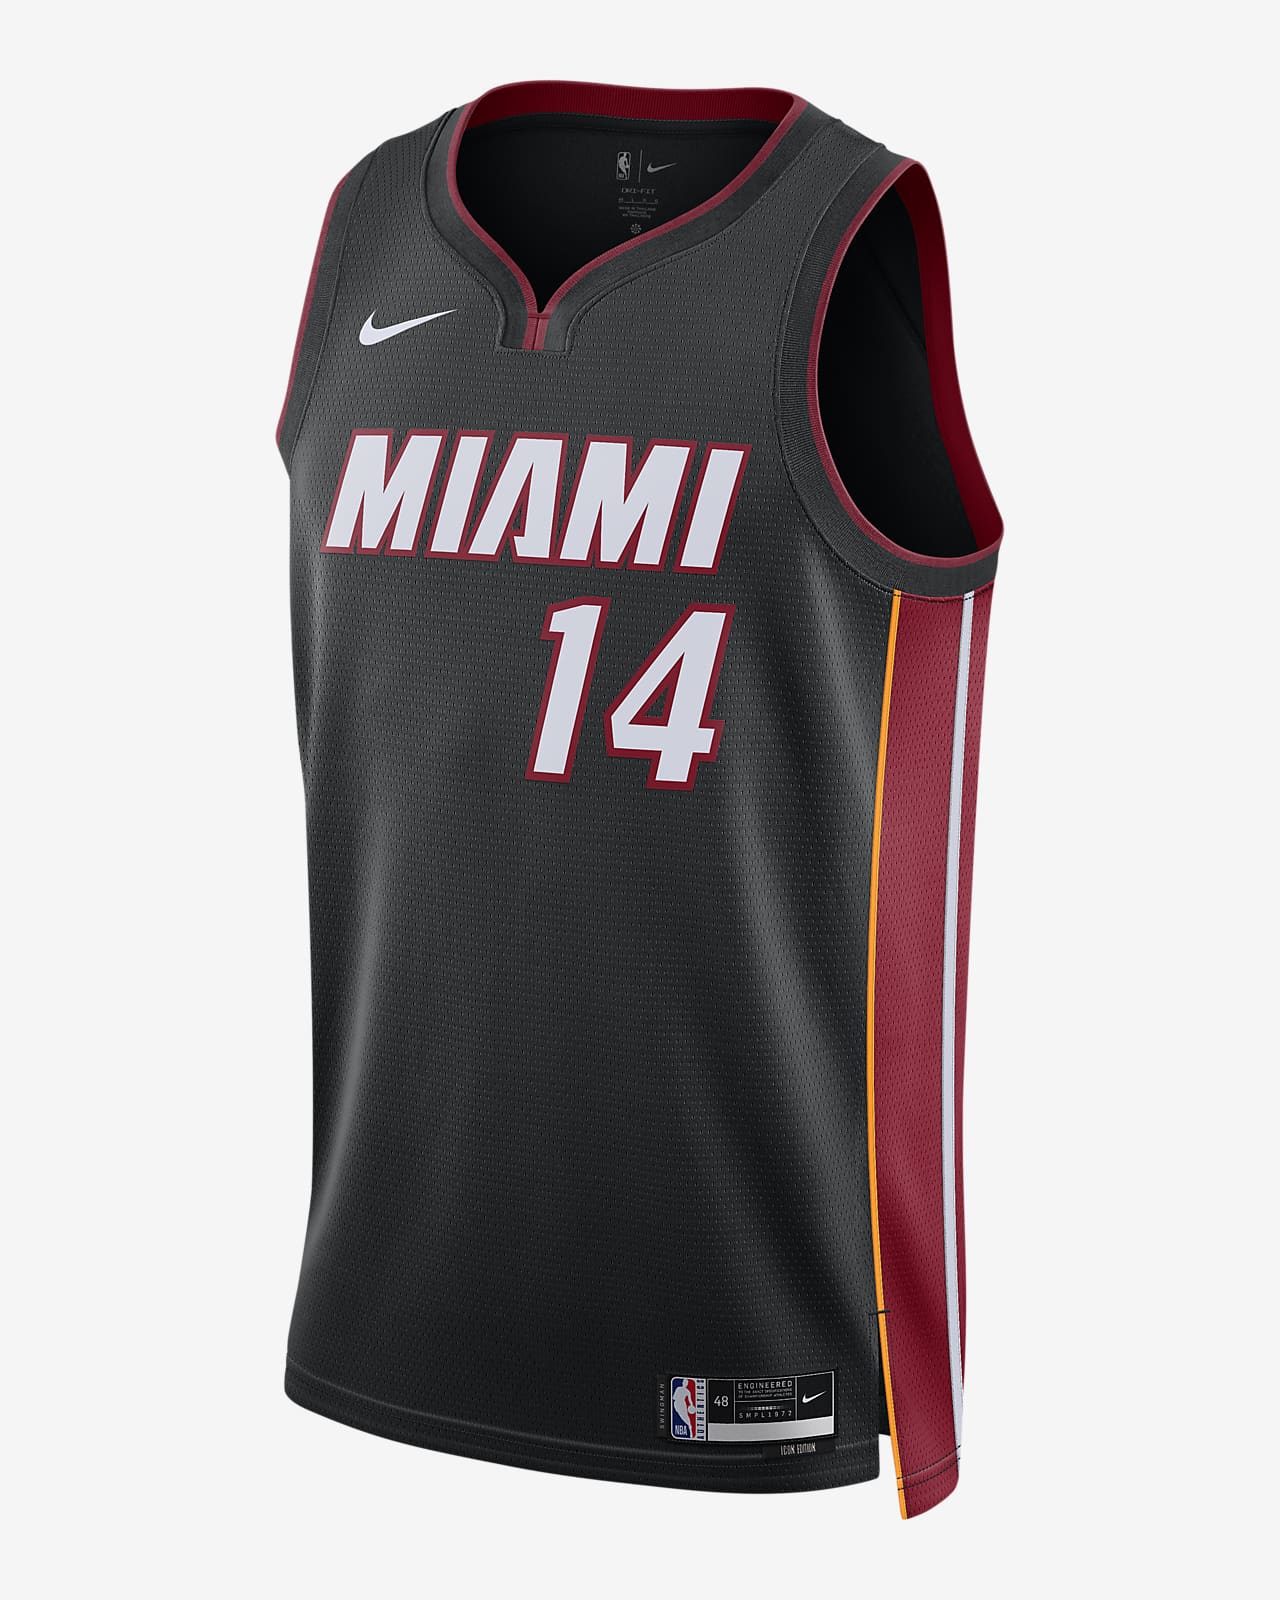 2022/23 赛季迈阿密热火队 Icon Edition Nike Dri-FIT NBA Swingman Jersey 男子透气速干球衣